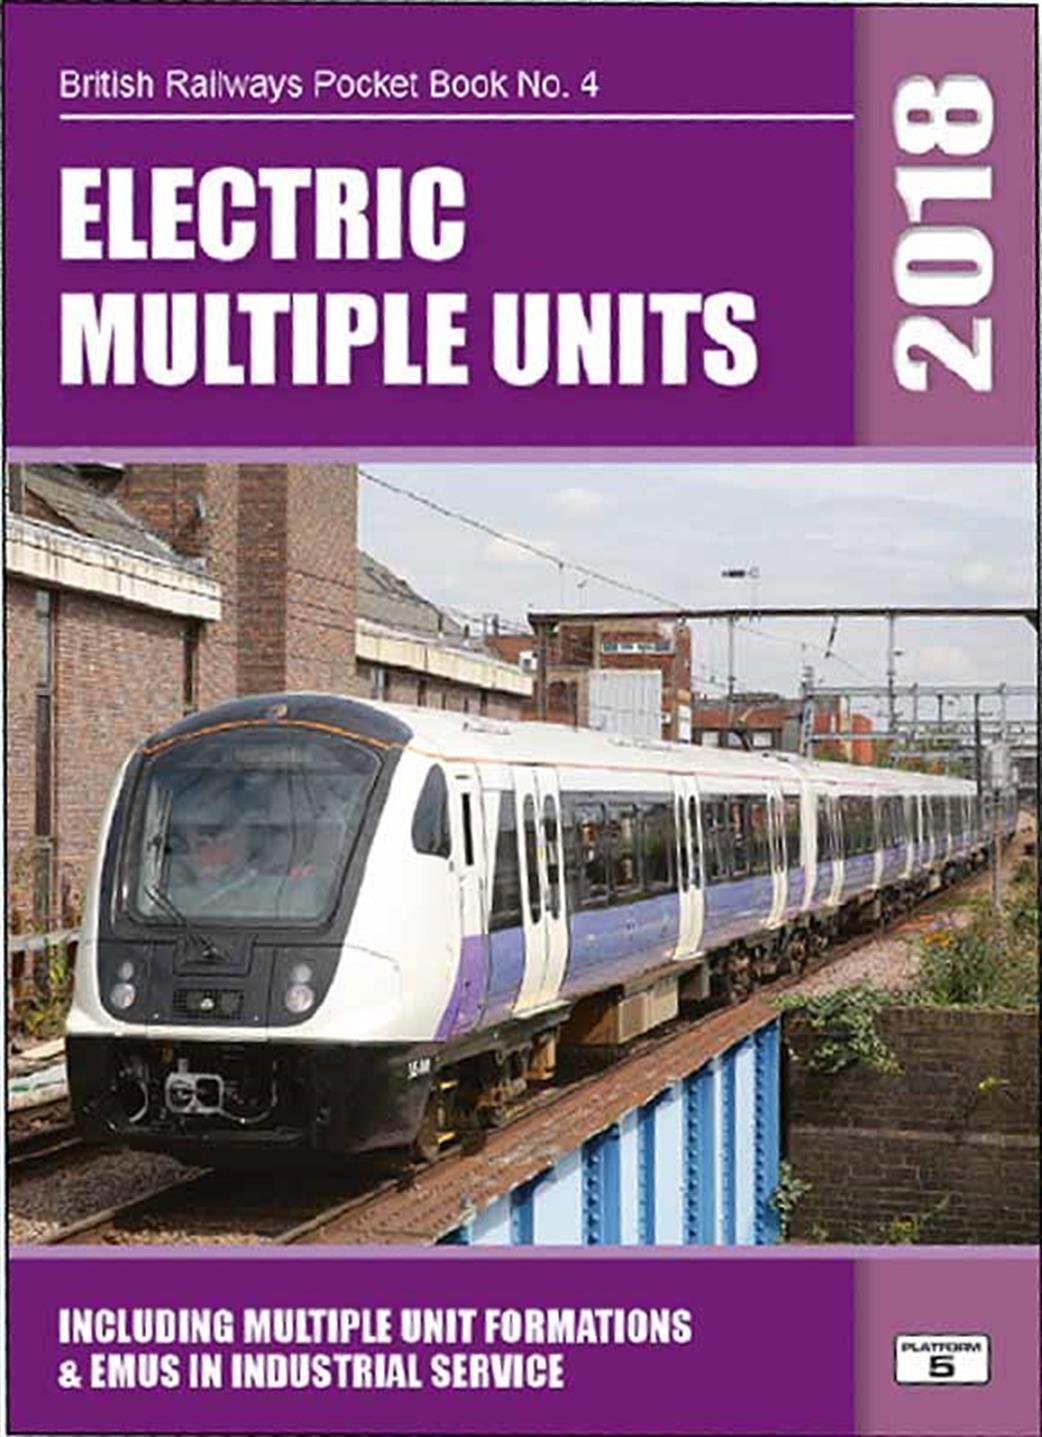 Platform 5 BRPB4 18 British Railways Electiric Multiple Units 2018 Pocket Book